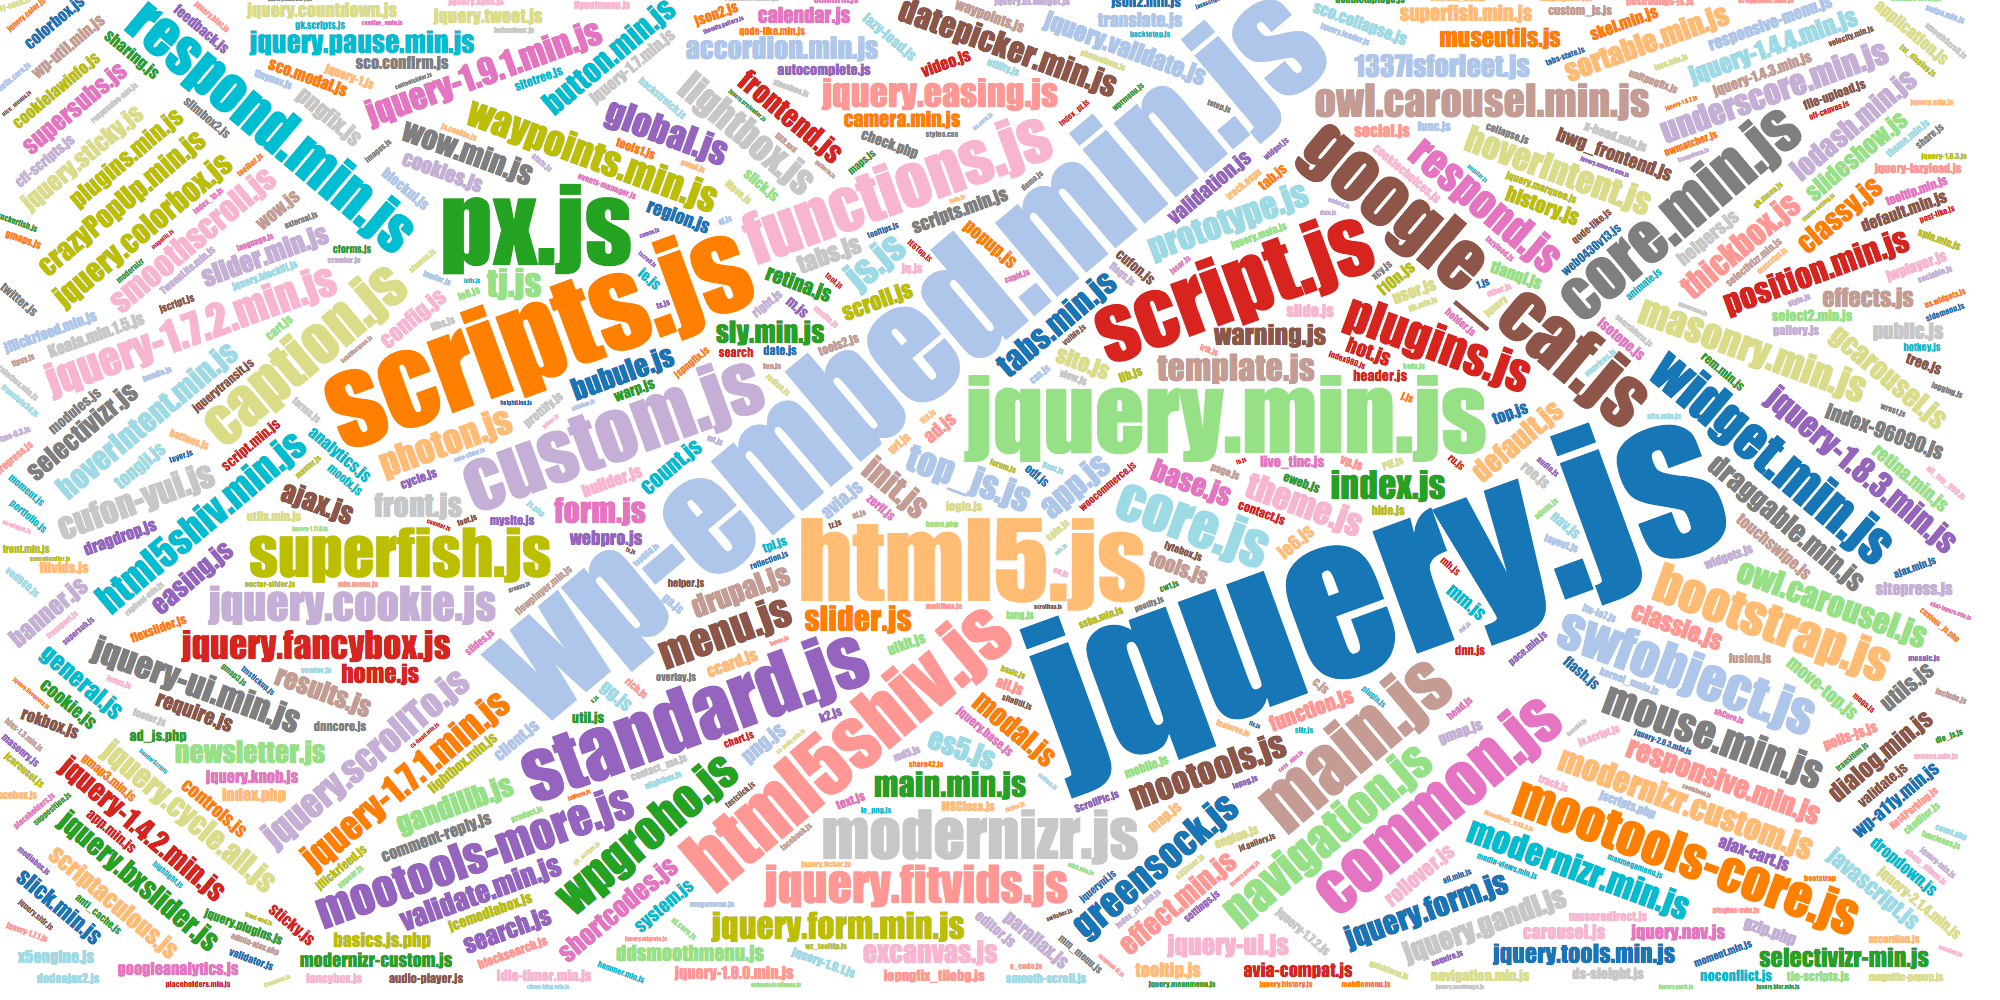 Popular names of JS files devicepx-jetpack.js, datepicker.min.js, etc.